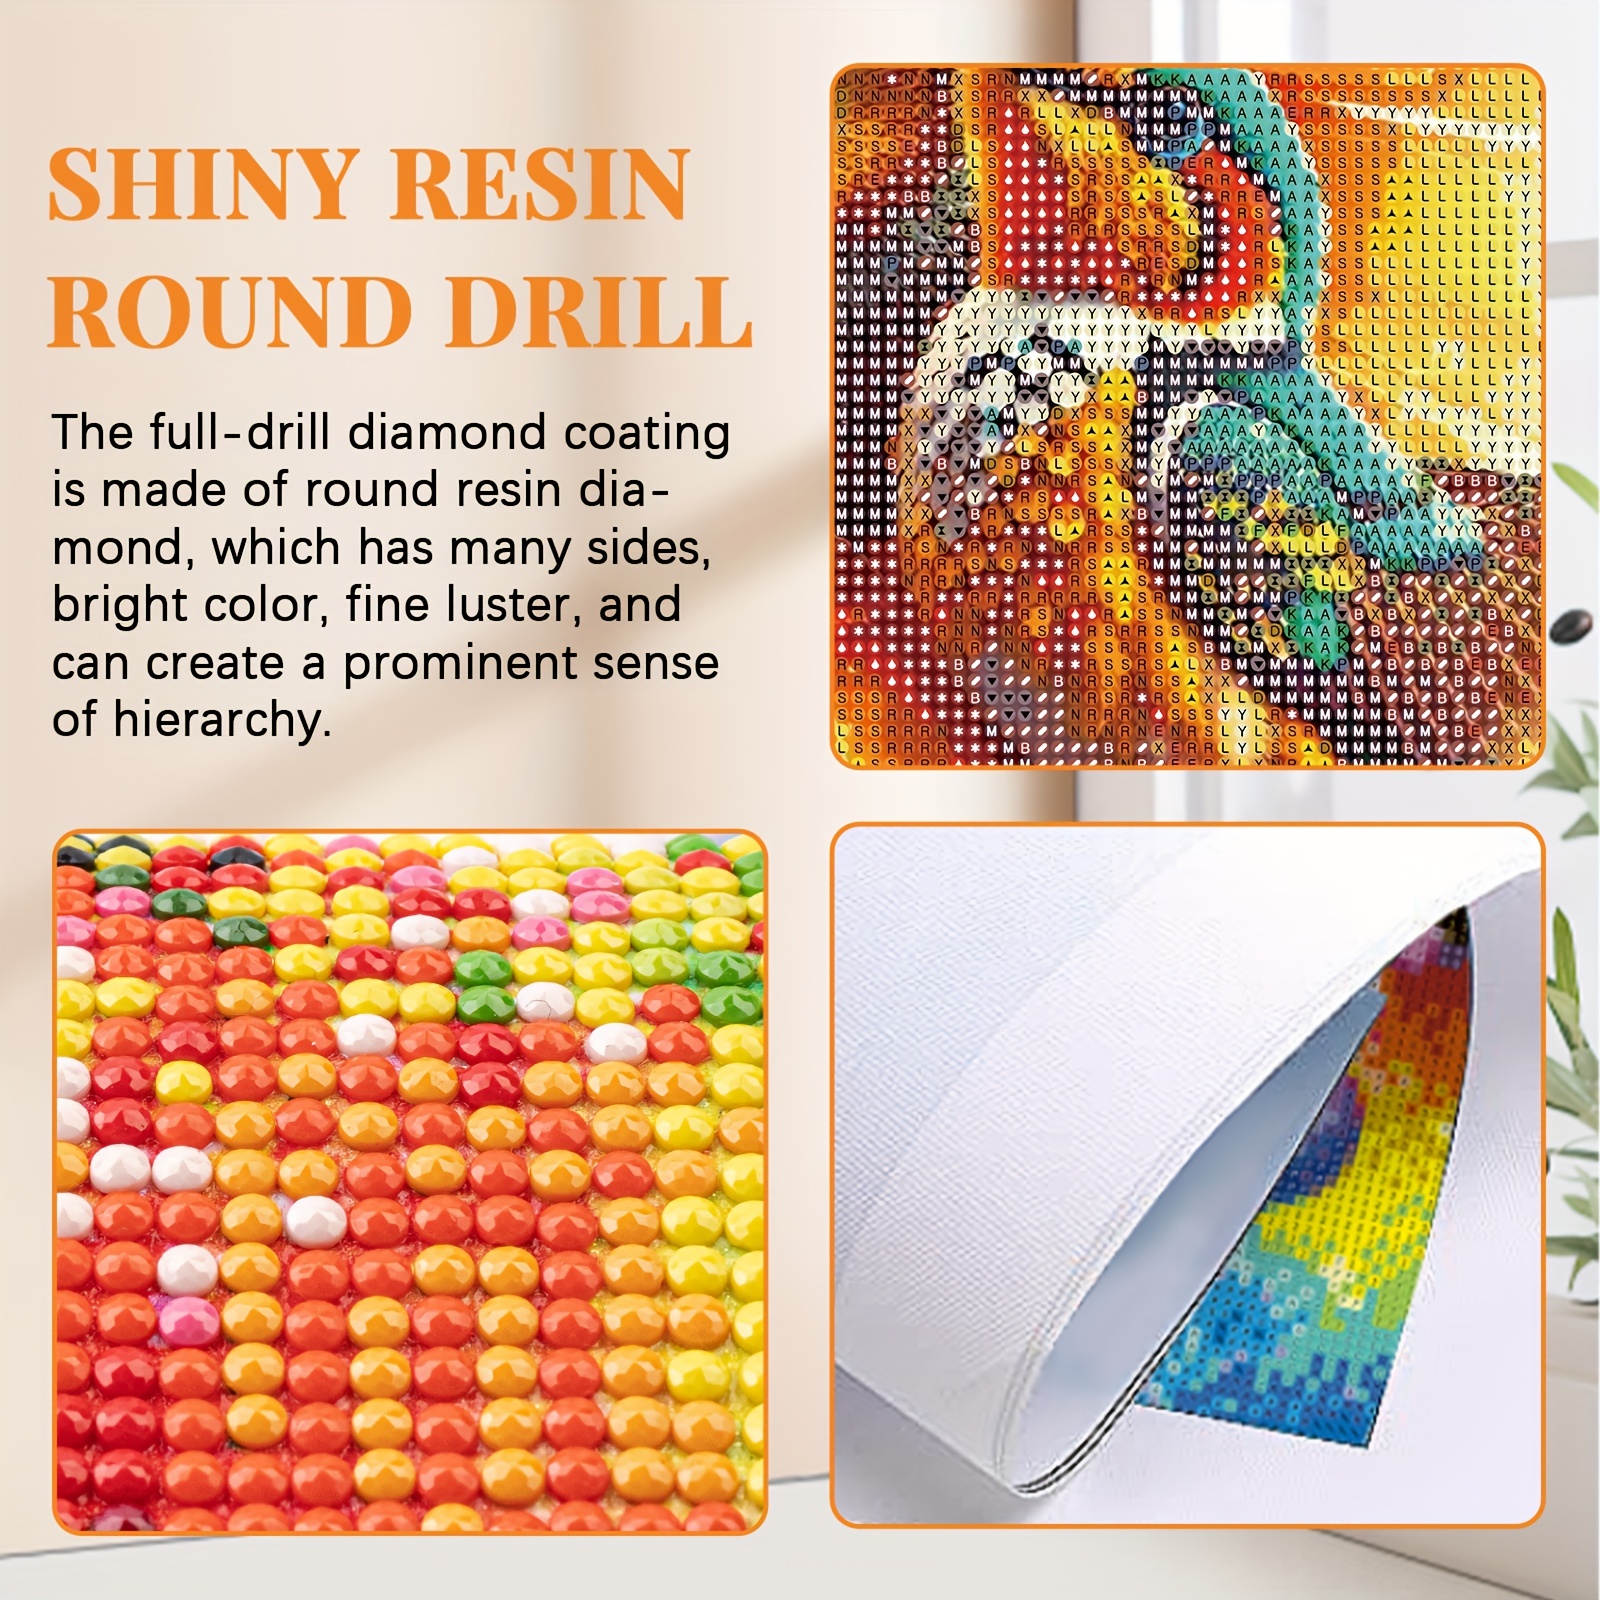 Sunflower Diamond Art Painting Kits for Adults - Full Drill Diamond Dots  Paintin